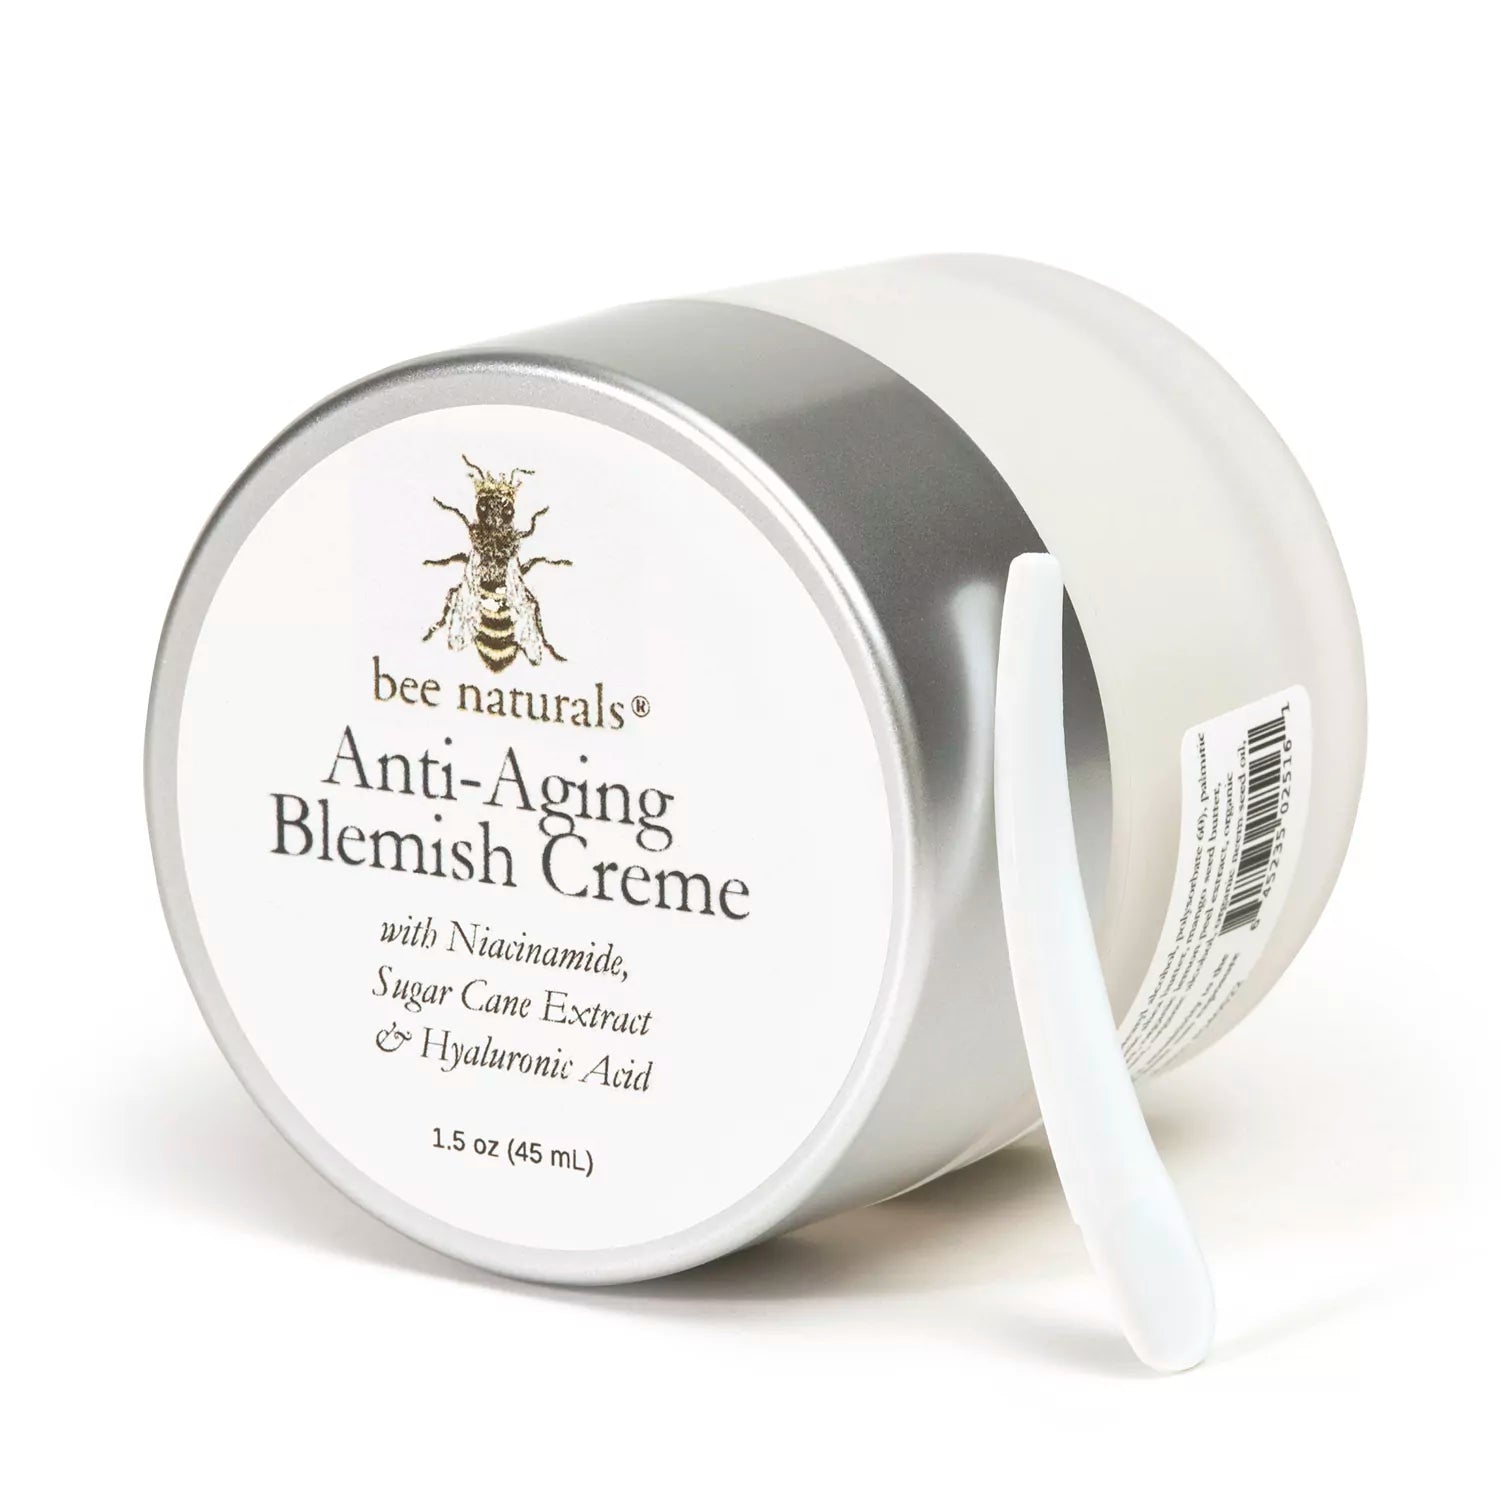 Anti-Aging Blemish Crème - Bee Naturals Store